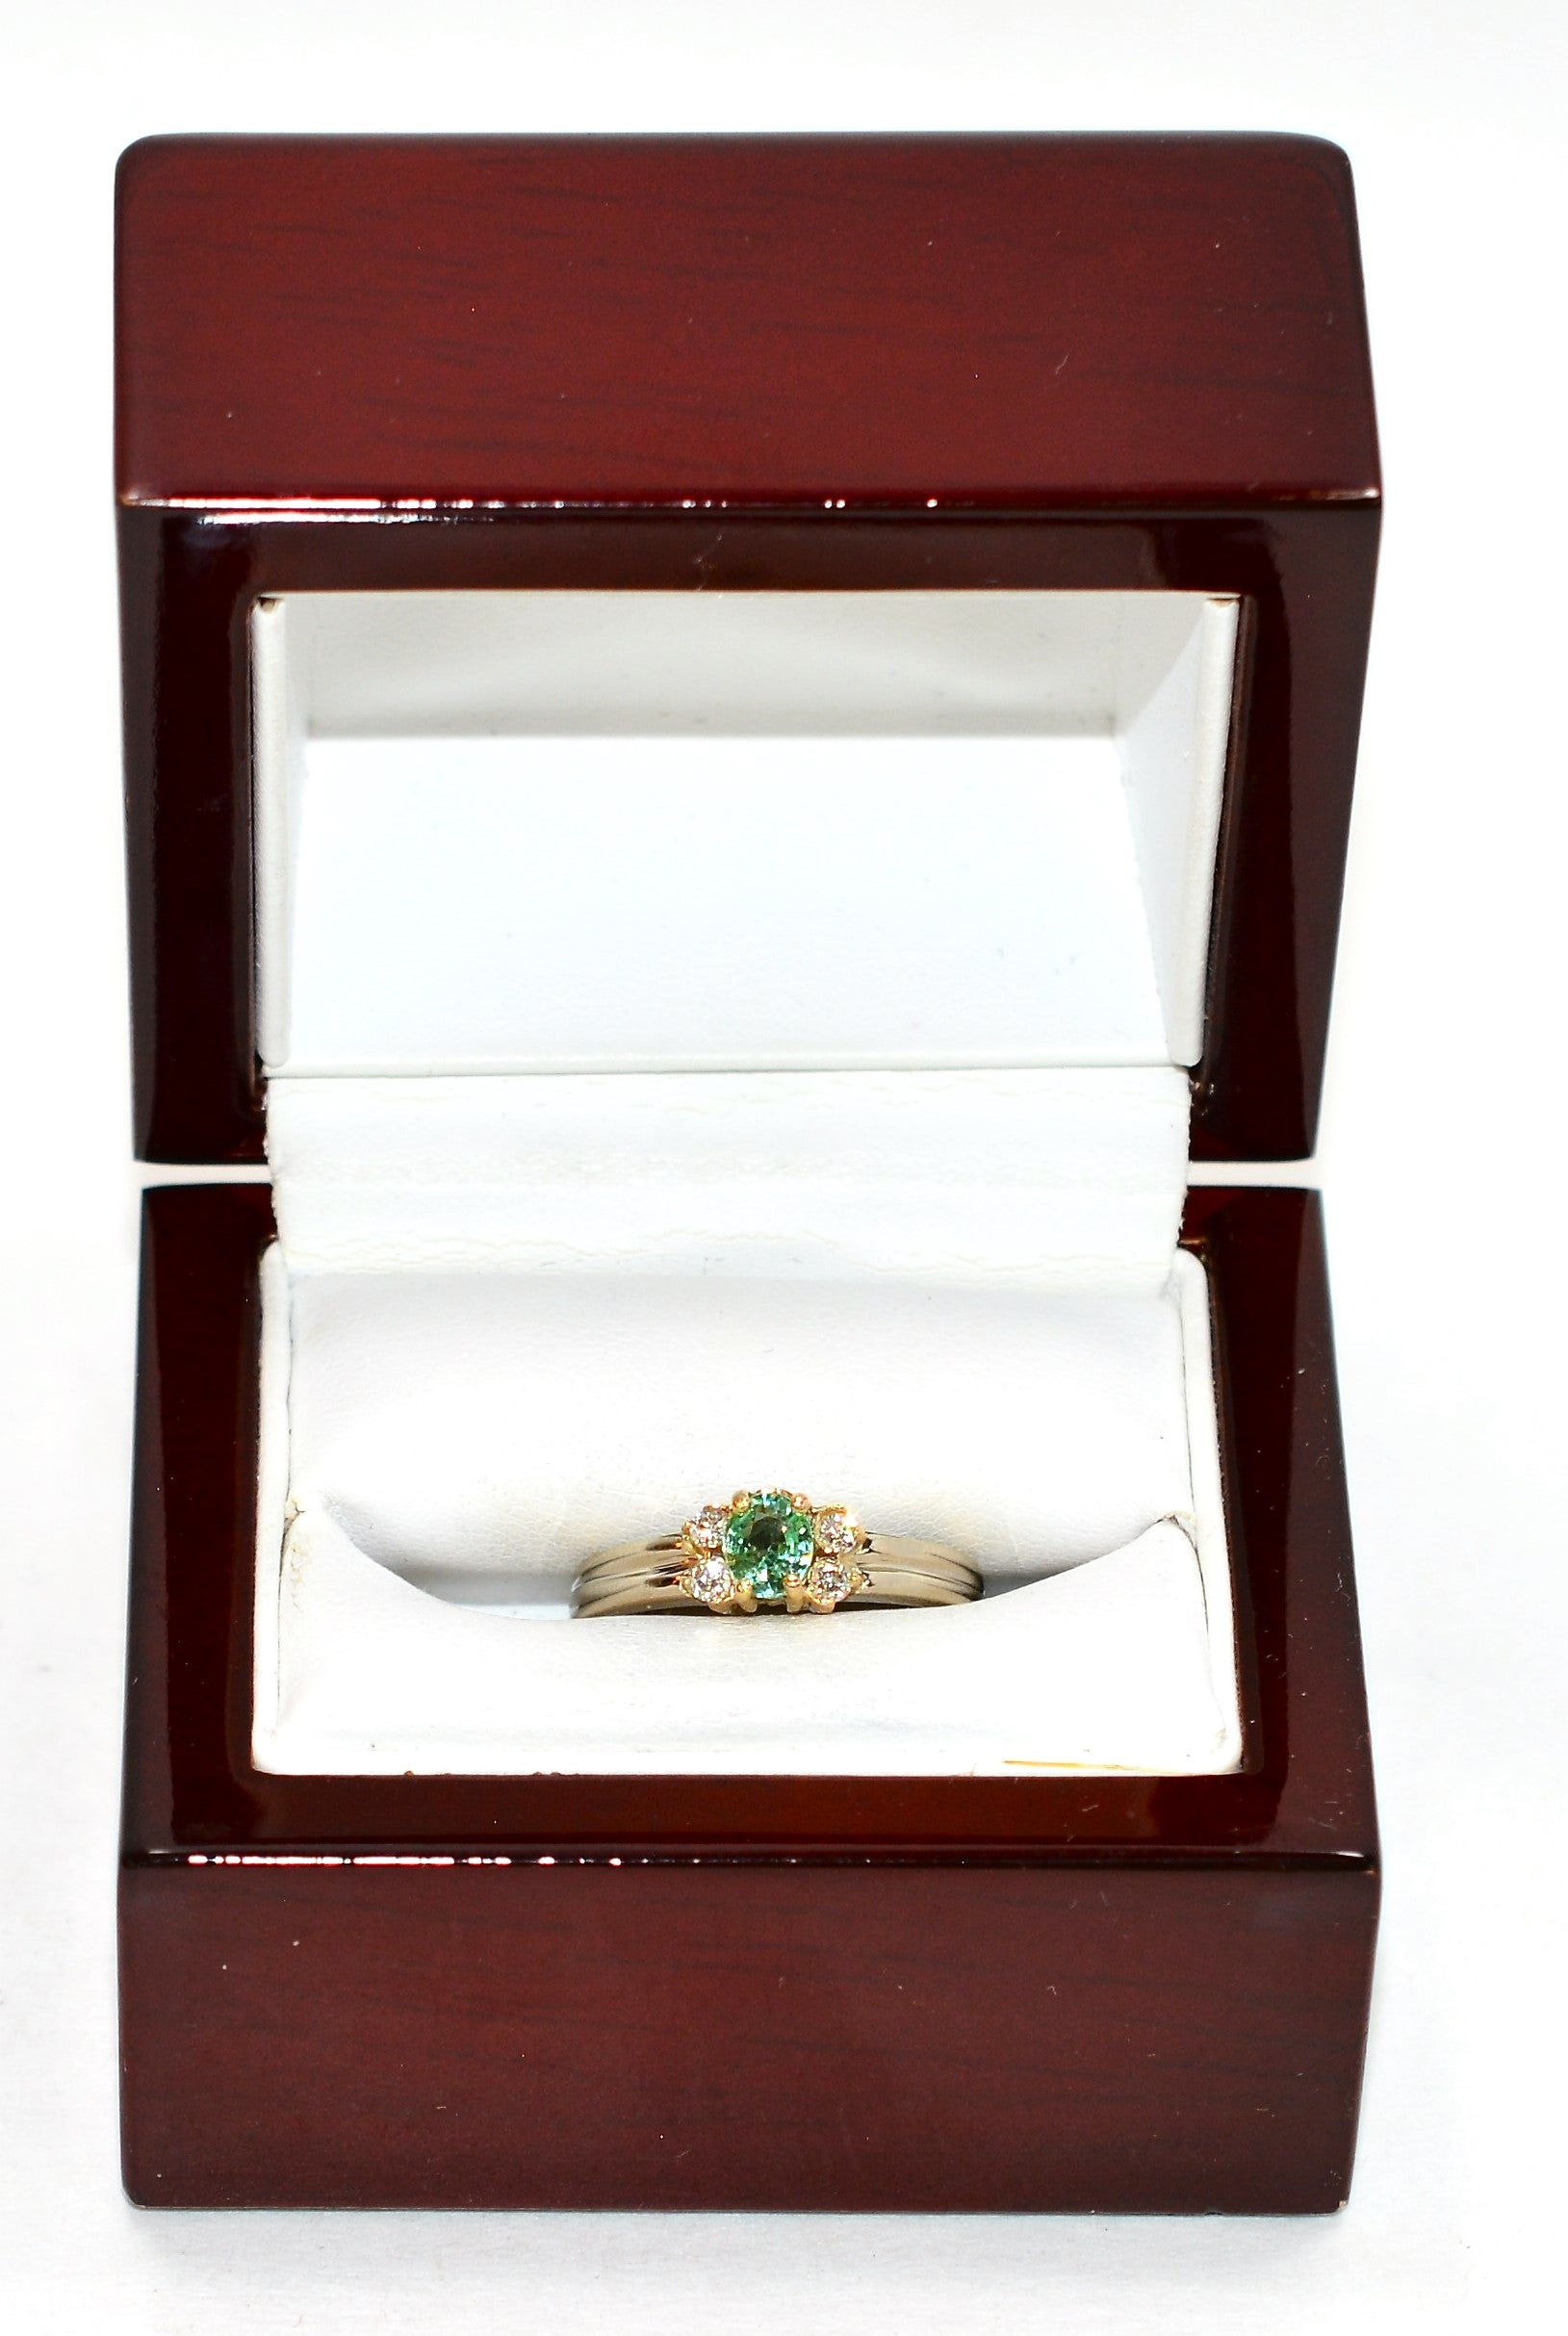 Natural Paraiba Tourmaline & Diamond Ring 14K White Gold .58tcw Birthstone Gemstone Two Tone Gold Statement Engagement Cocktail Estate Ring